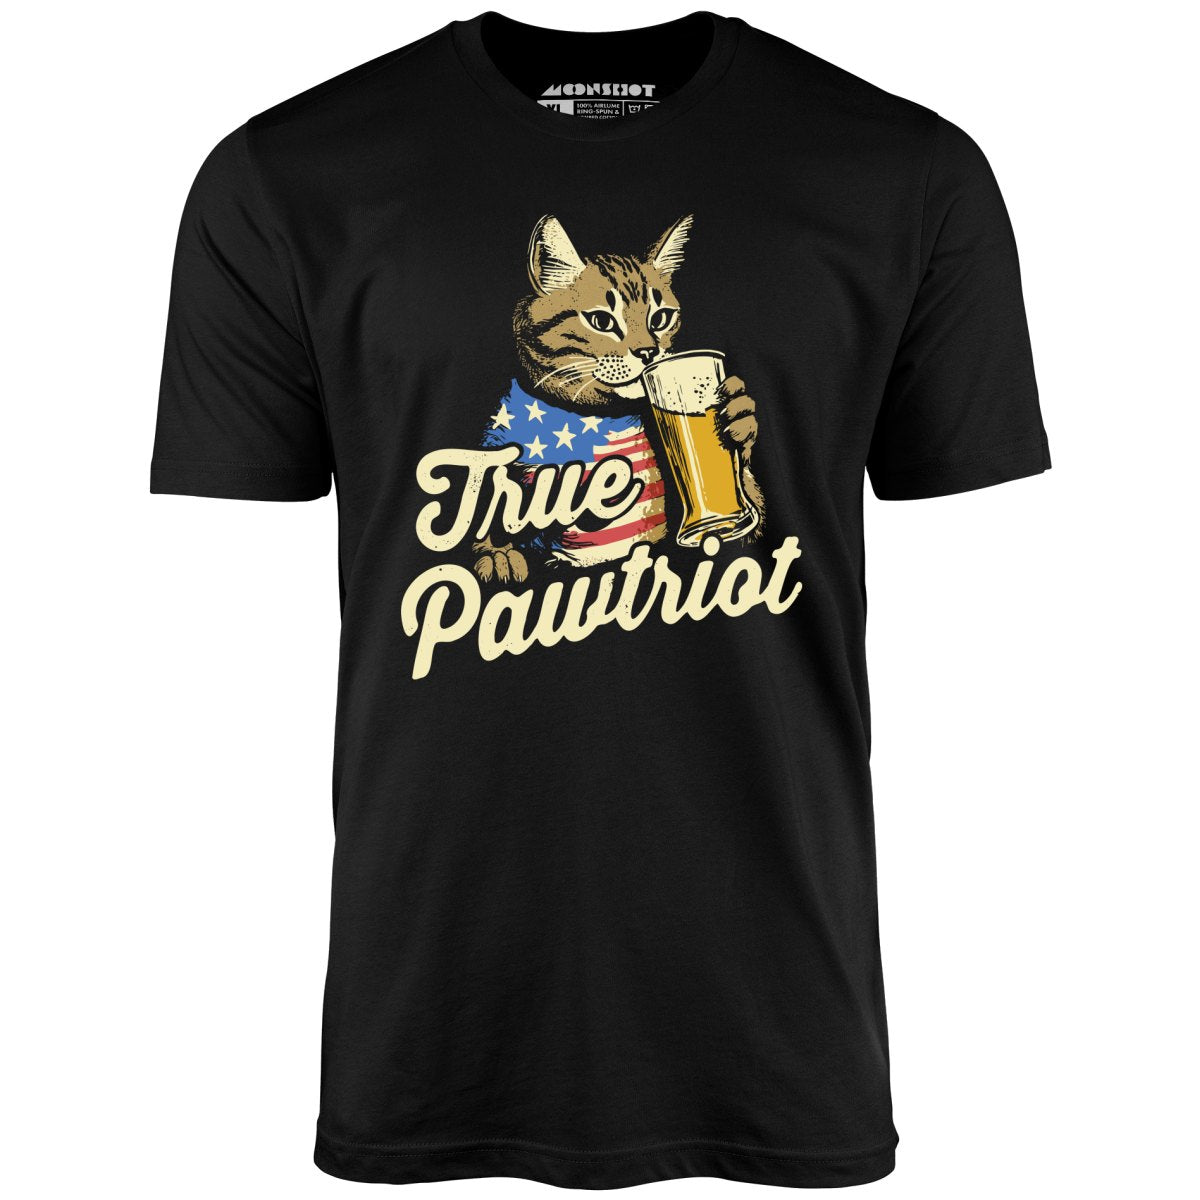 True Pawtriot - Unisex T-Shirt